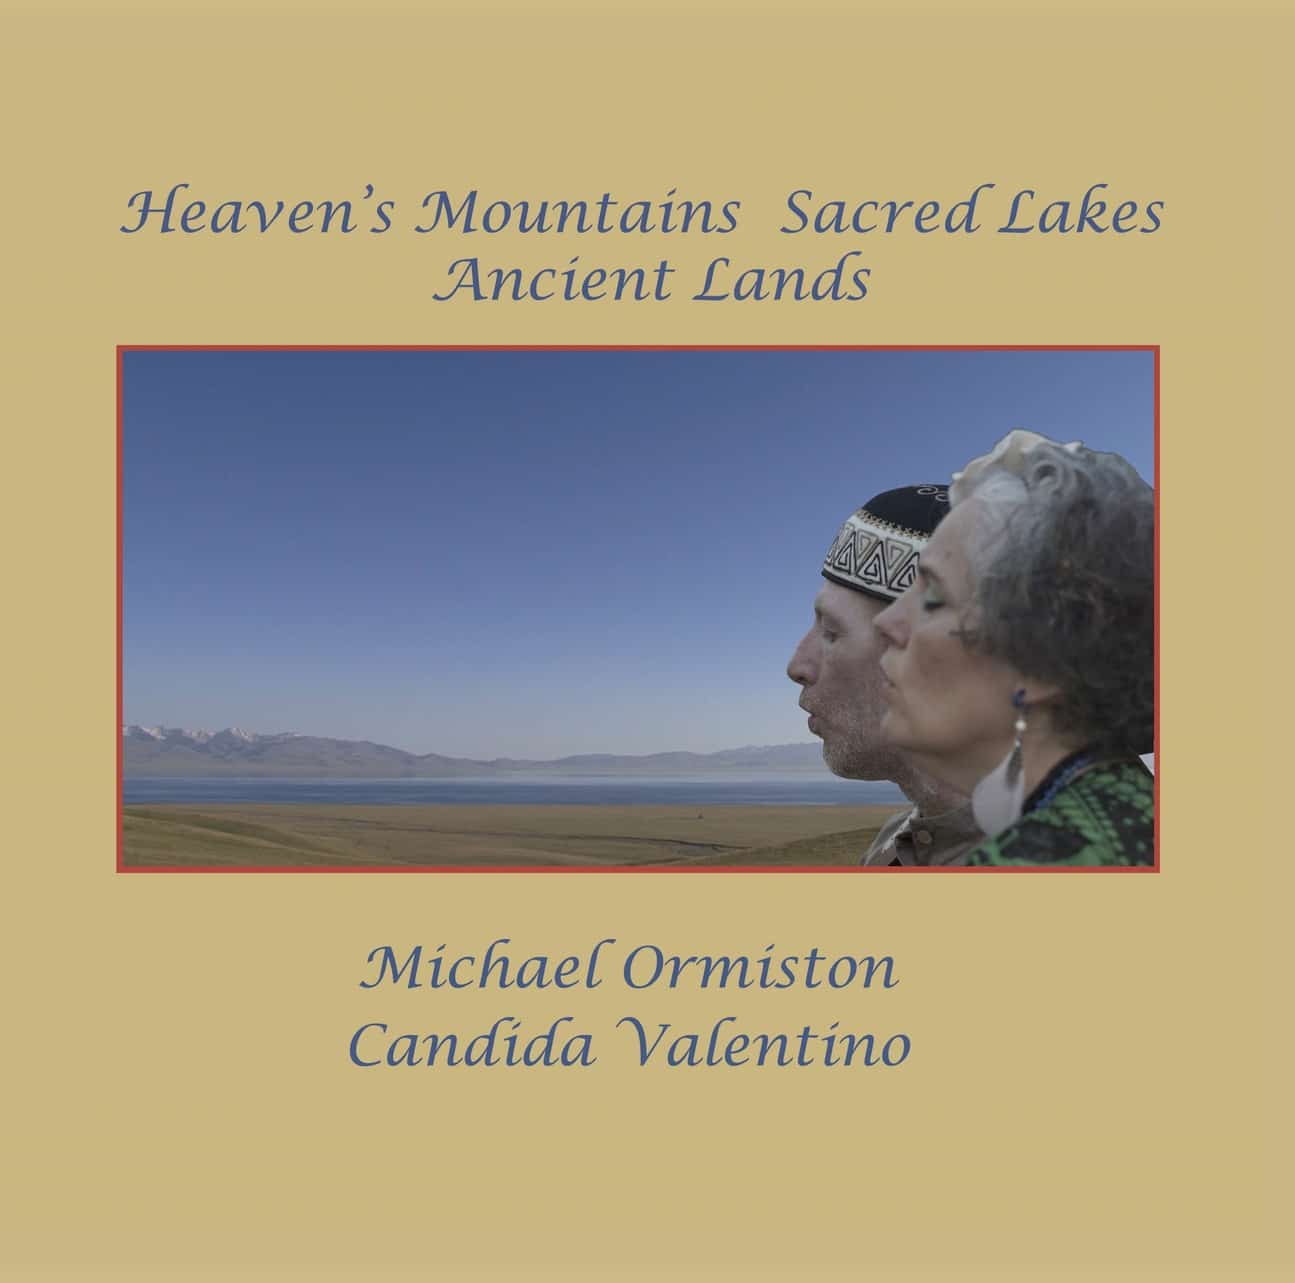 Heavens Mountains Sacred Lakes Ancient Lands cd main page